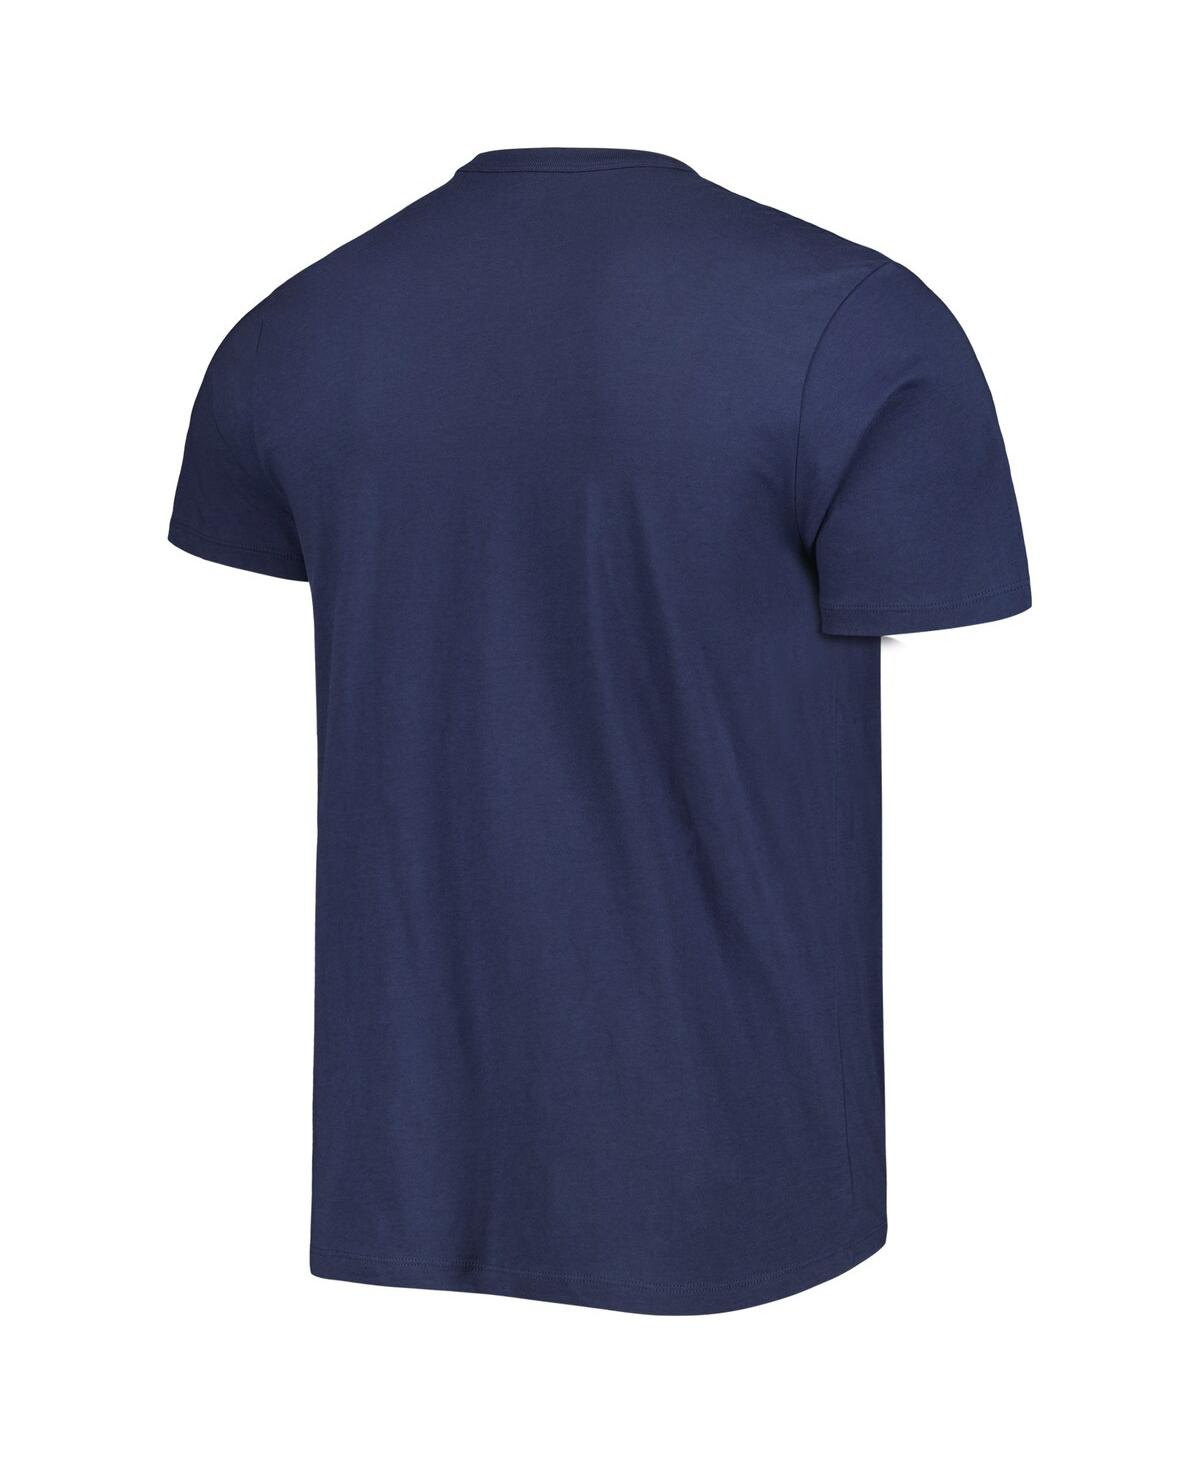 Shop 47 Brand Men's ' Navy Denver Broncos All Arch Franklin T-shirt